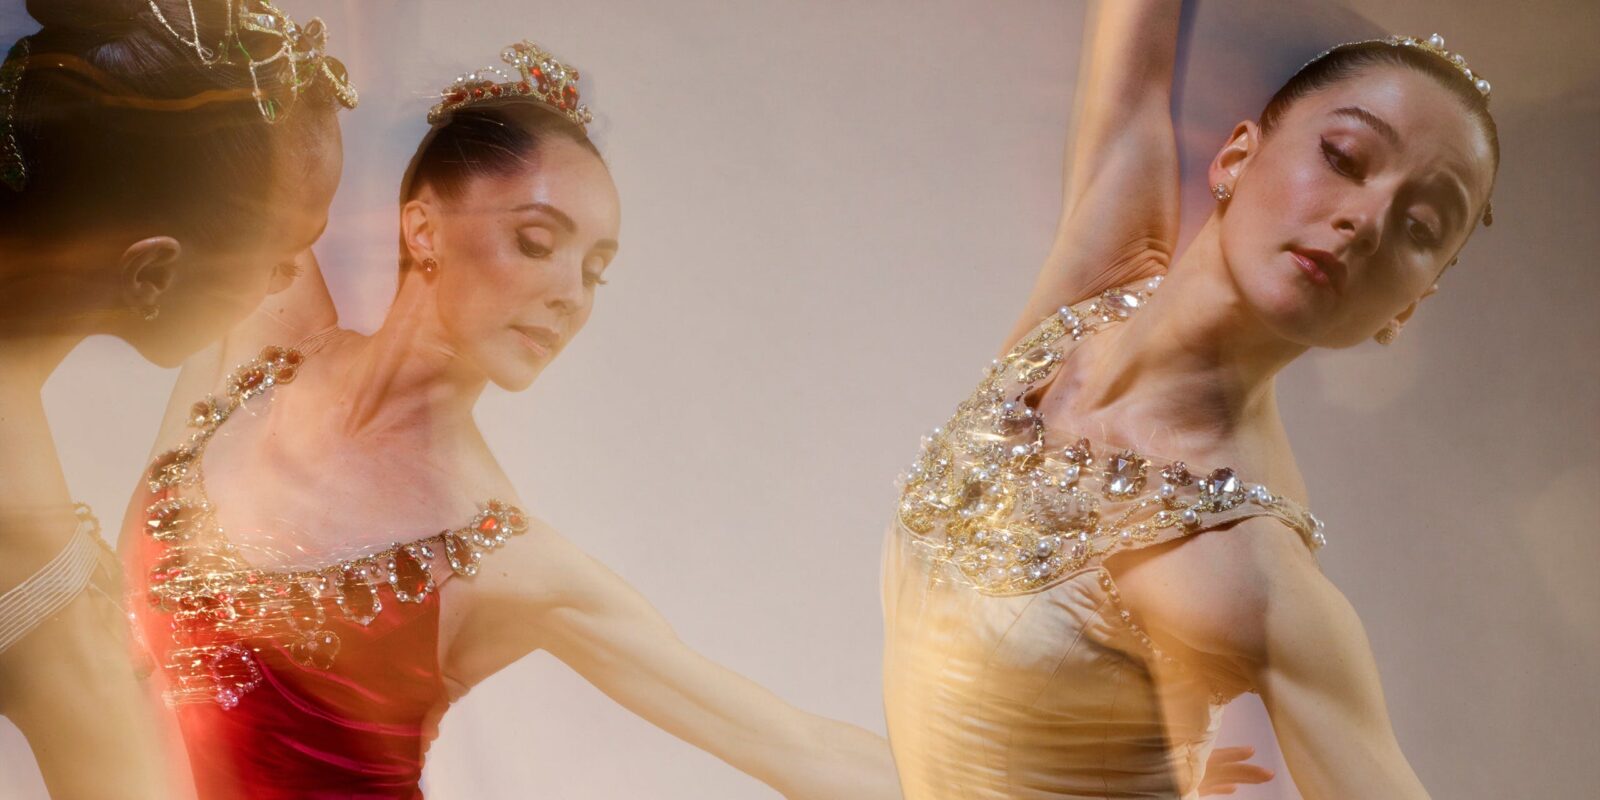 The Australian Ballet presents Jewels